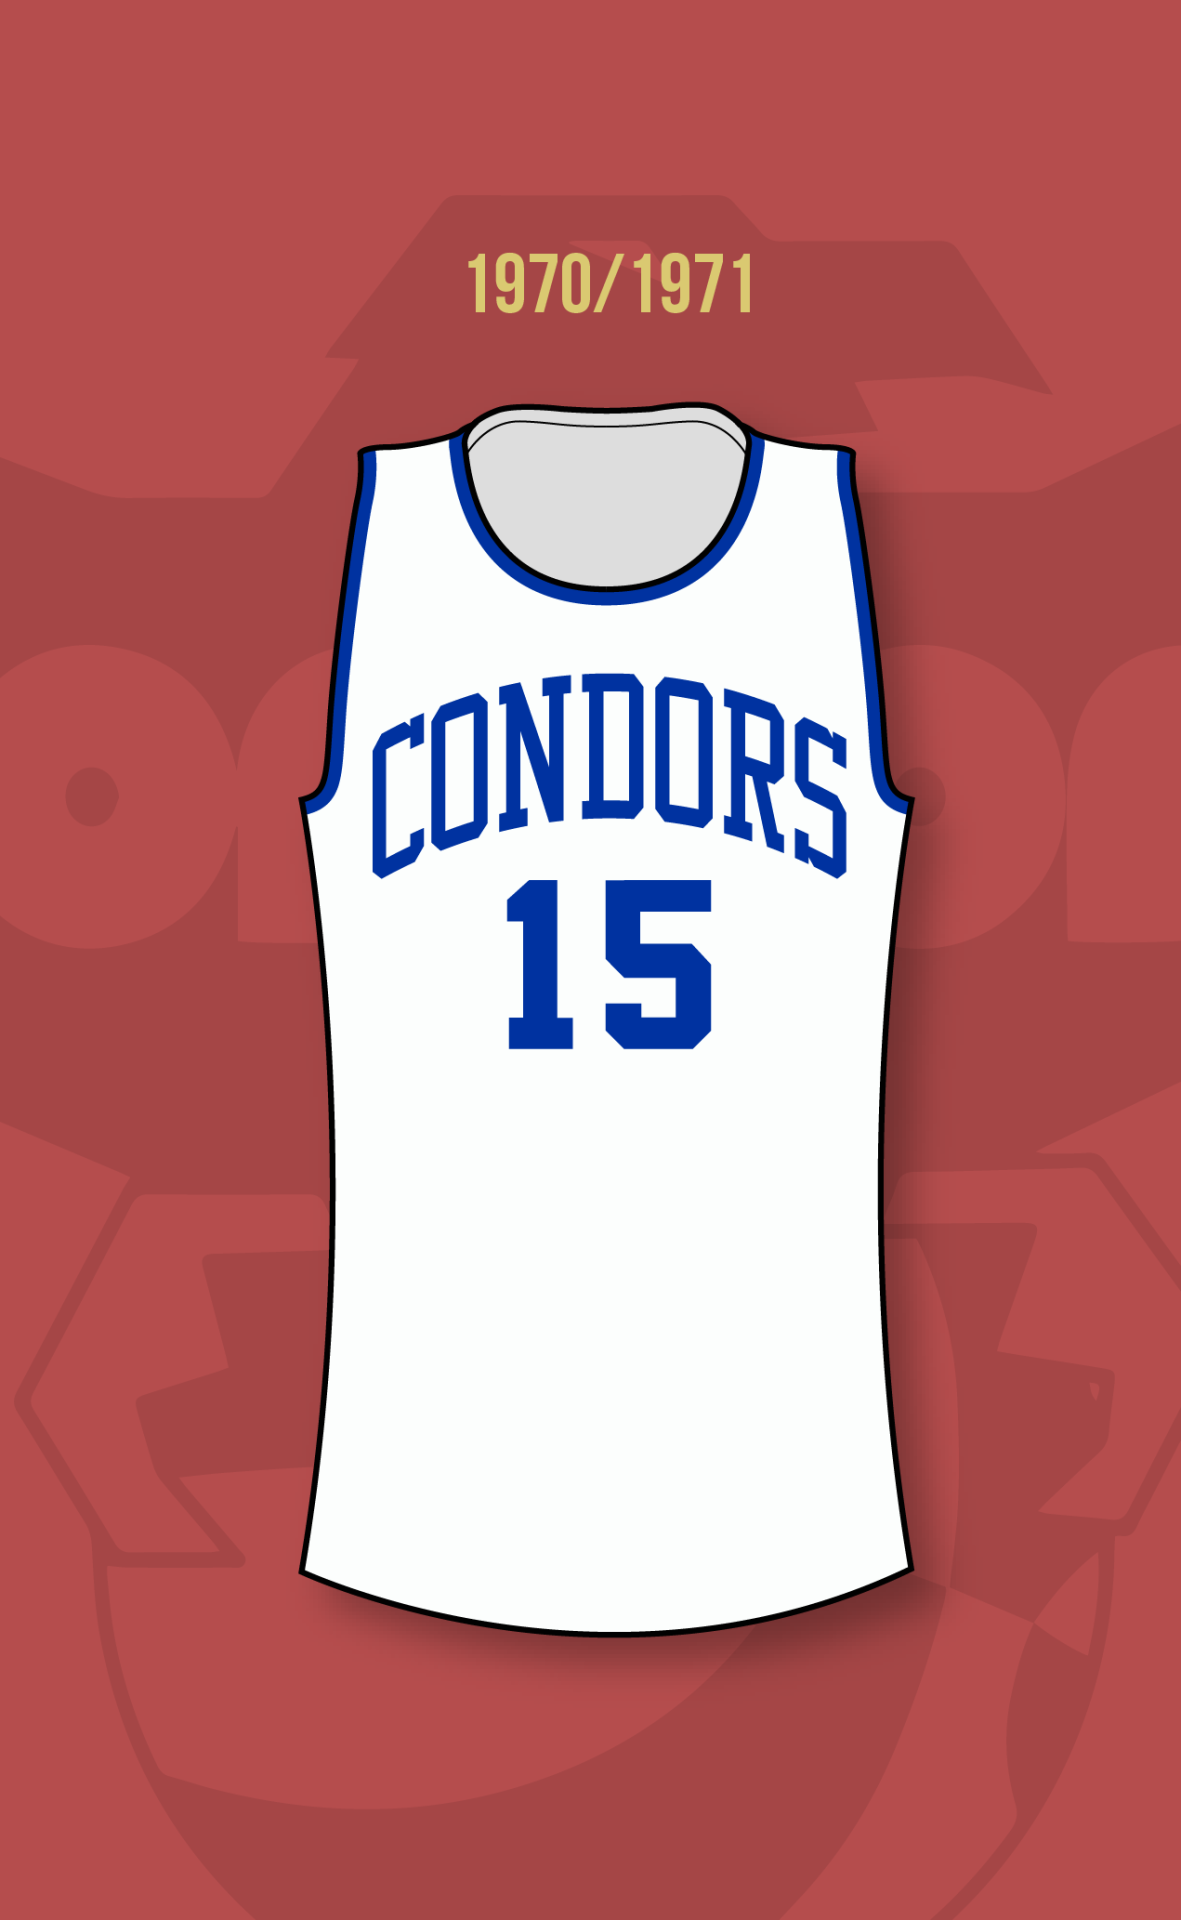 pittsburgh condors jersey